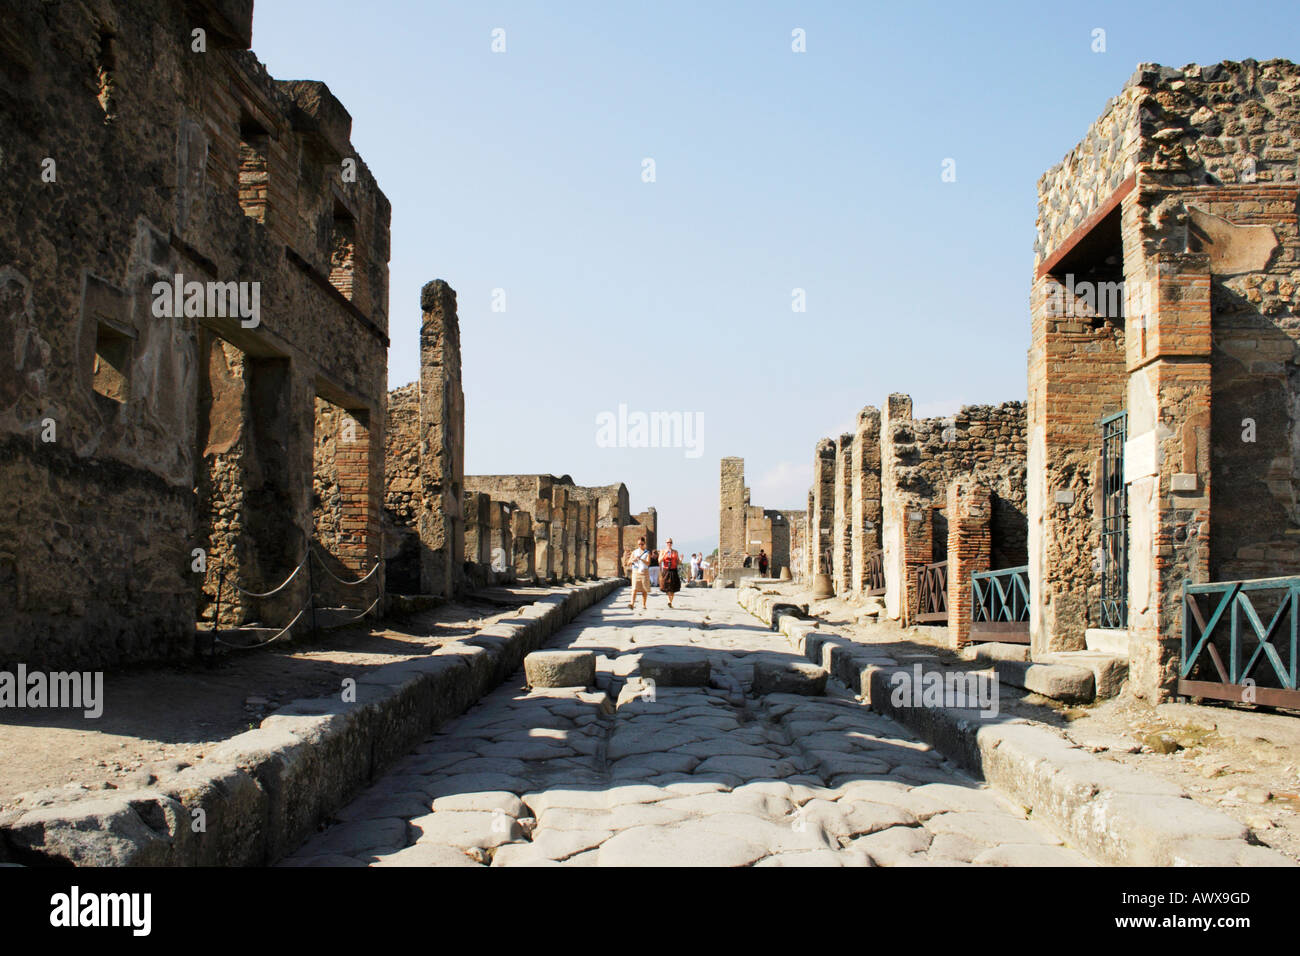 A Roman Street in Pompeii, Italy. Stock Photo